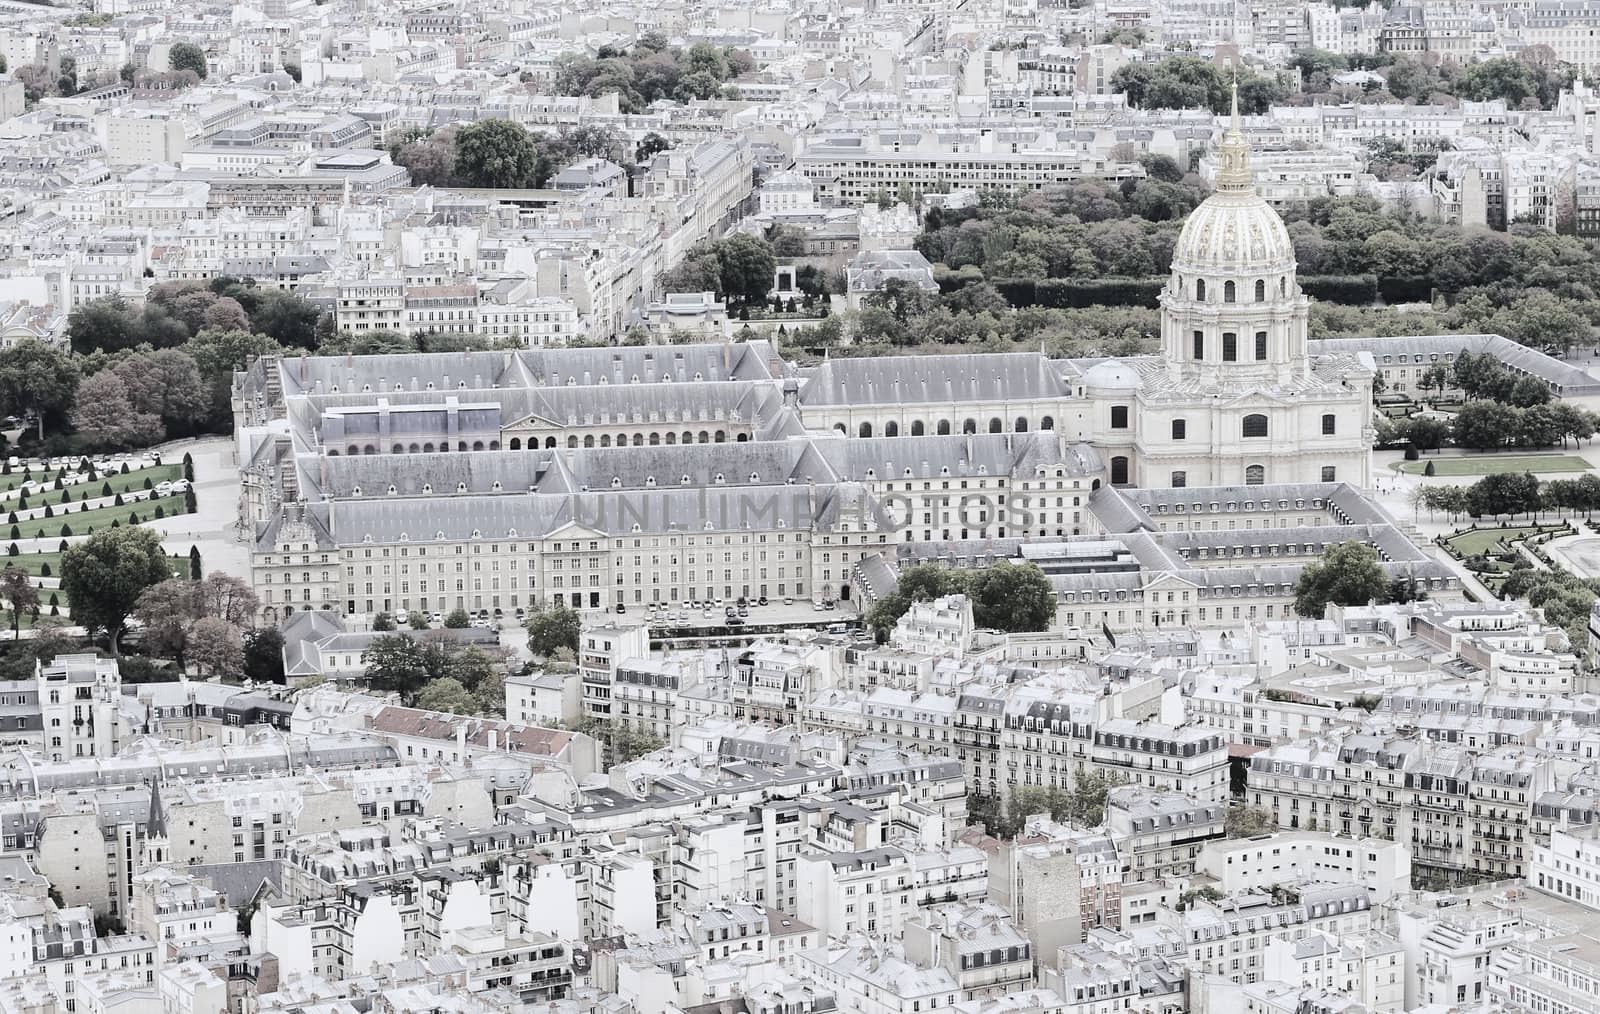 Paris, France - aerial city view with Les Invalides building. UNESCO World Heritage Site